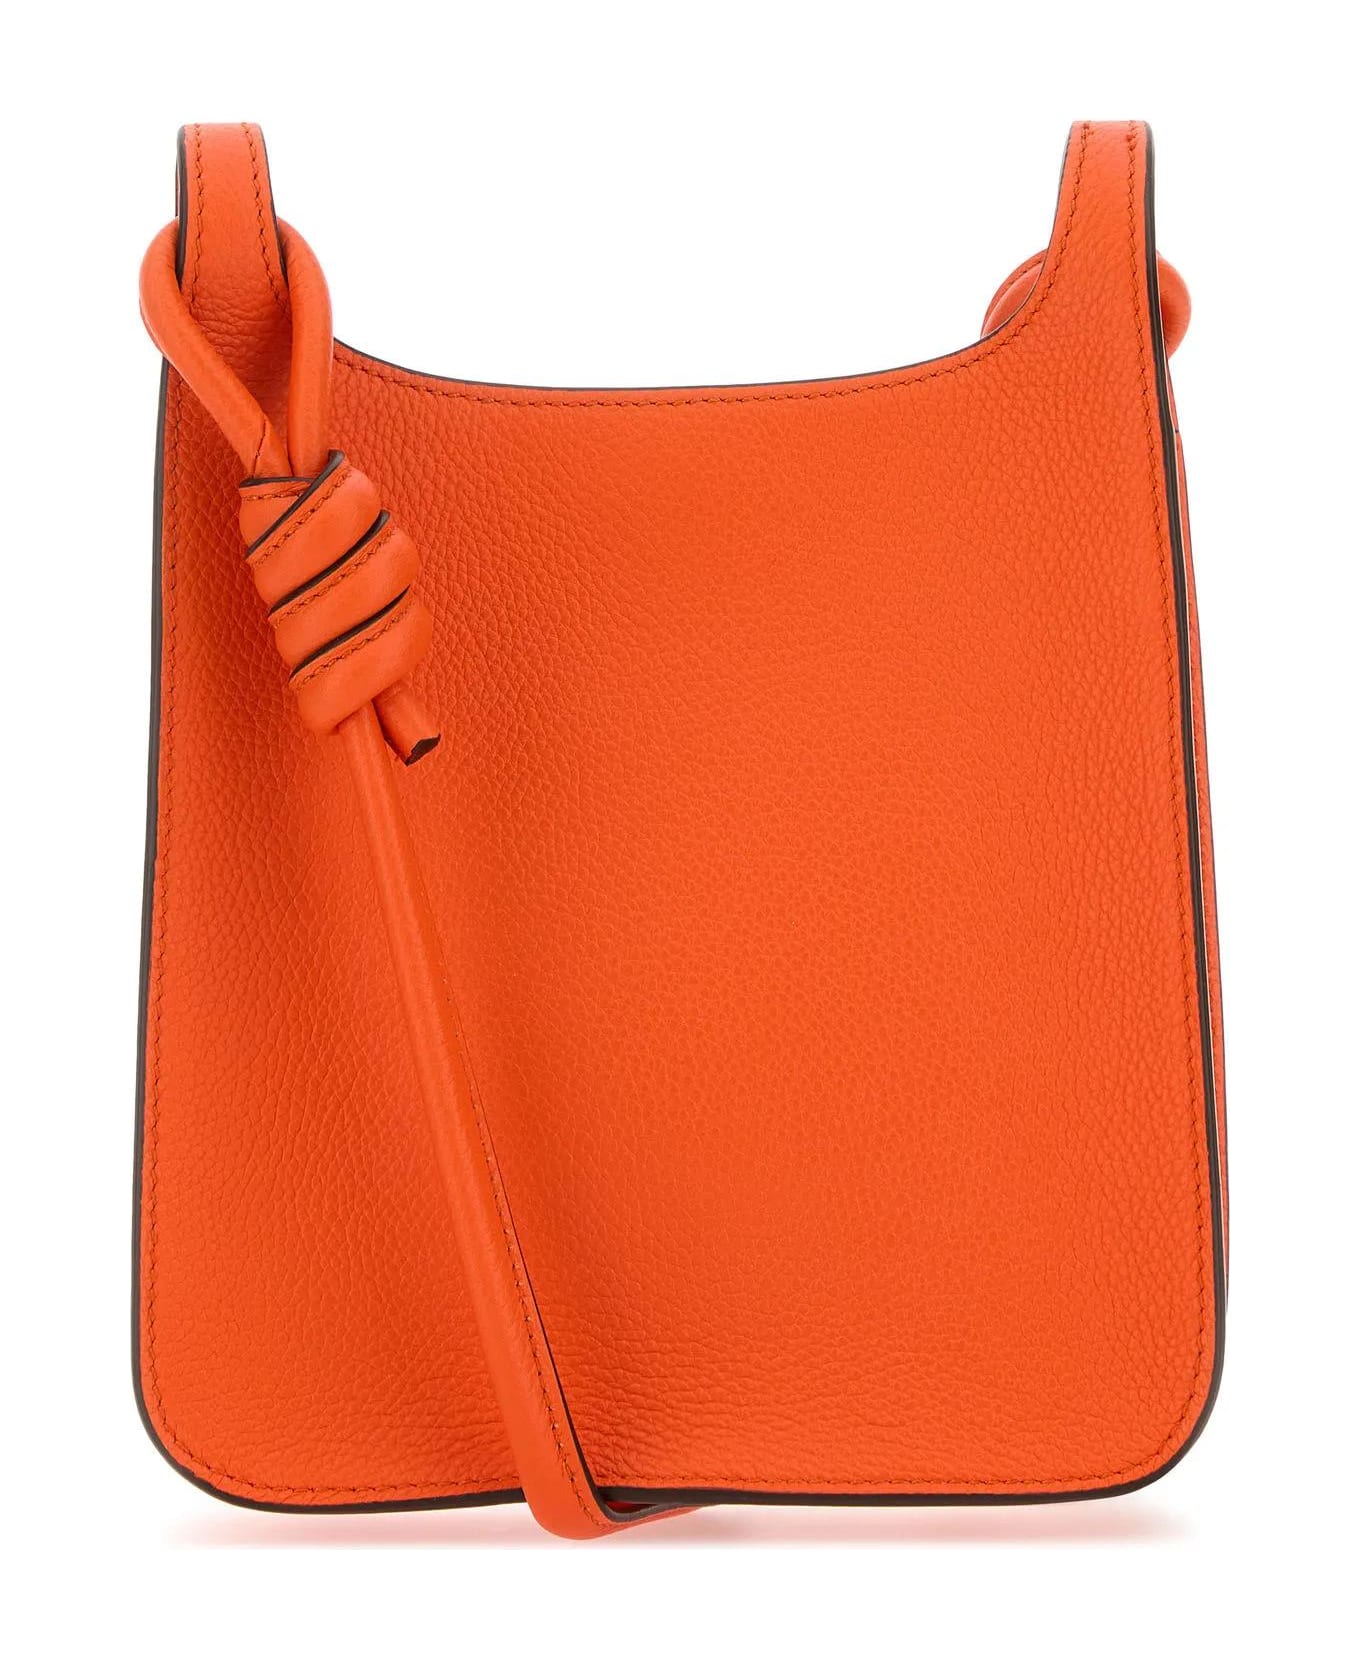 MCM Dark Orange Leather Mini Himmel Hobo Crossbody Bag - ORANGE ショルダーバッグ